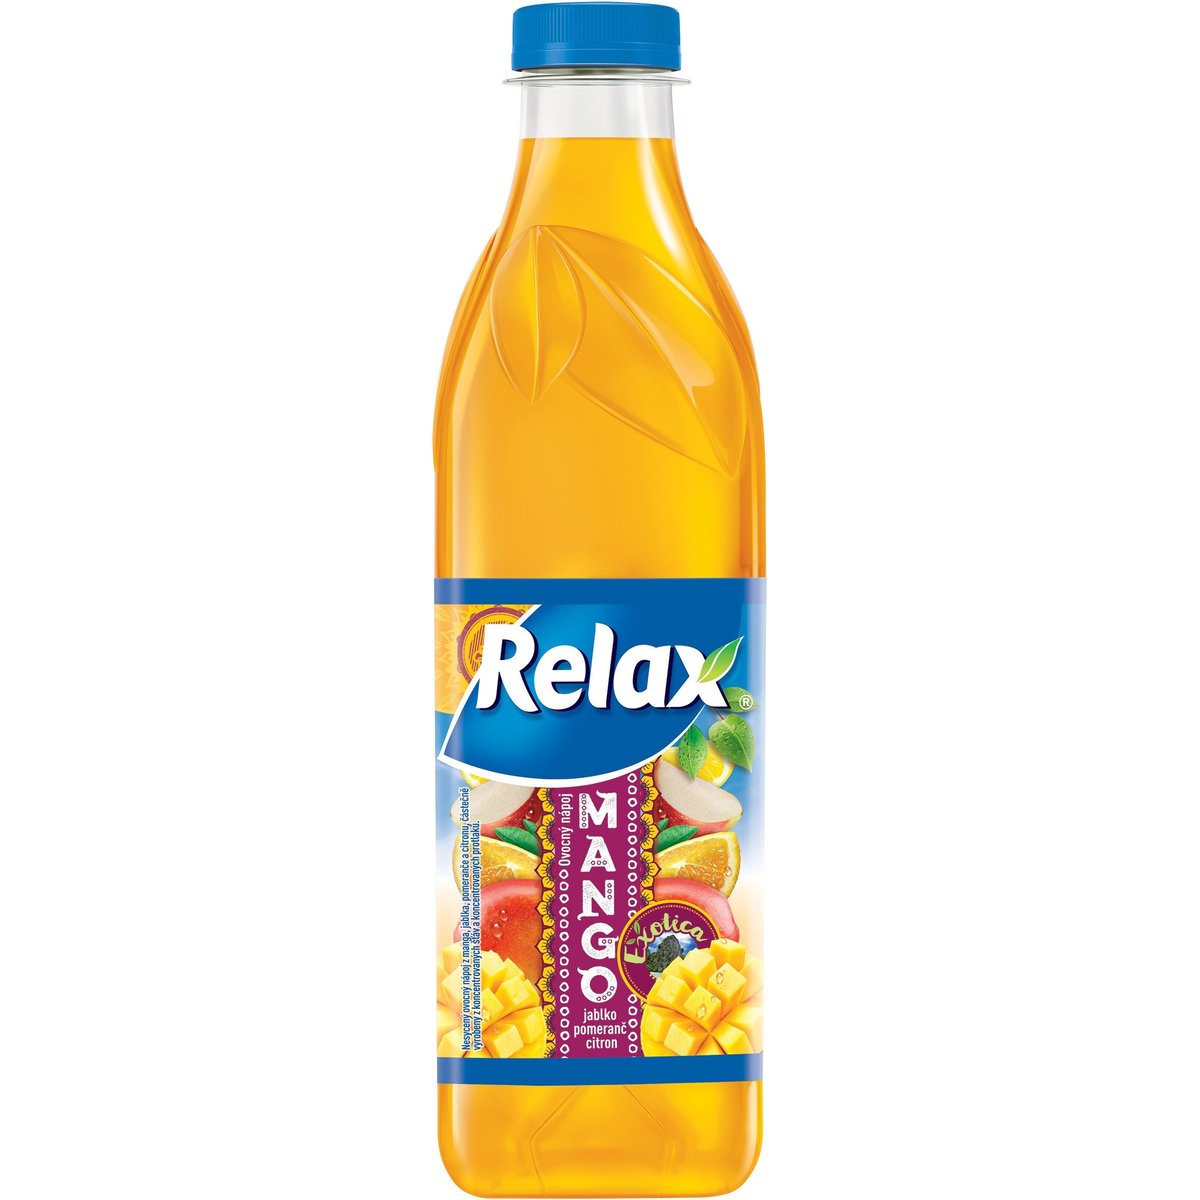 Relax exotica Mango PET